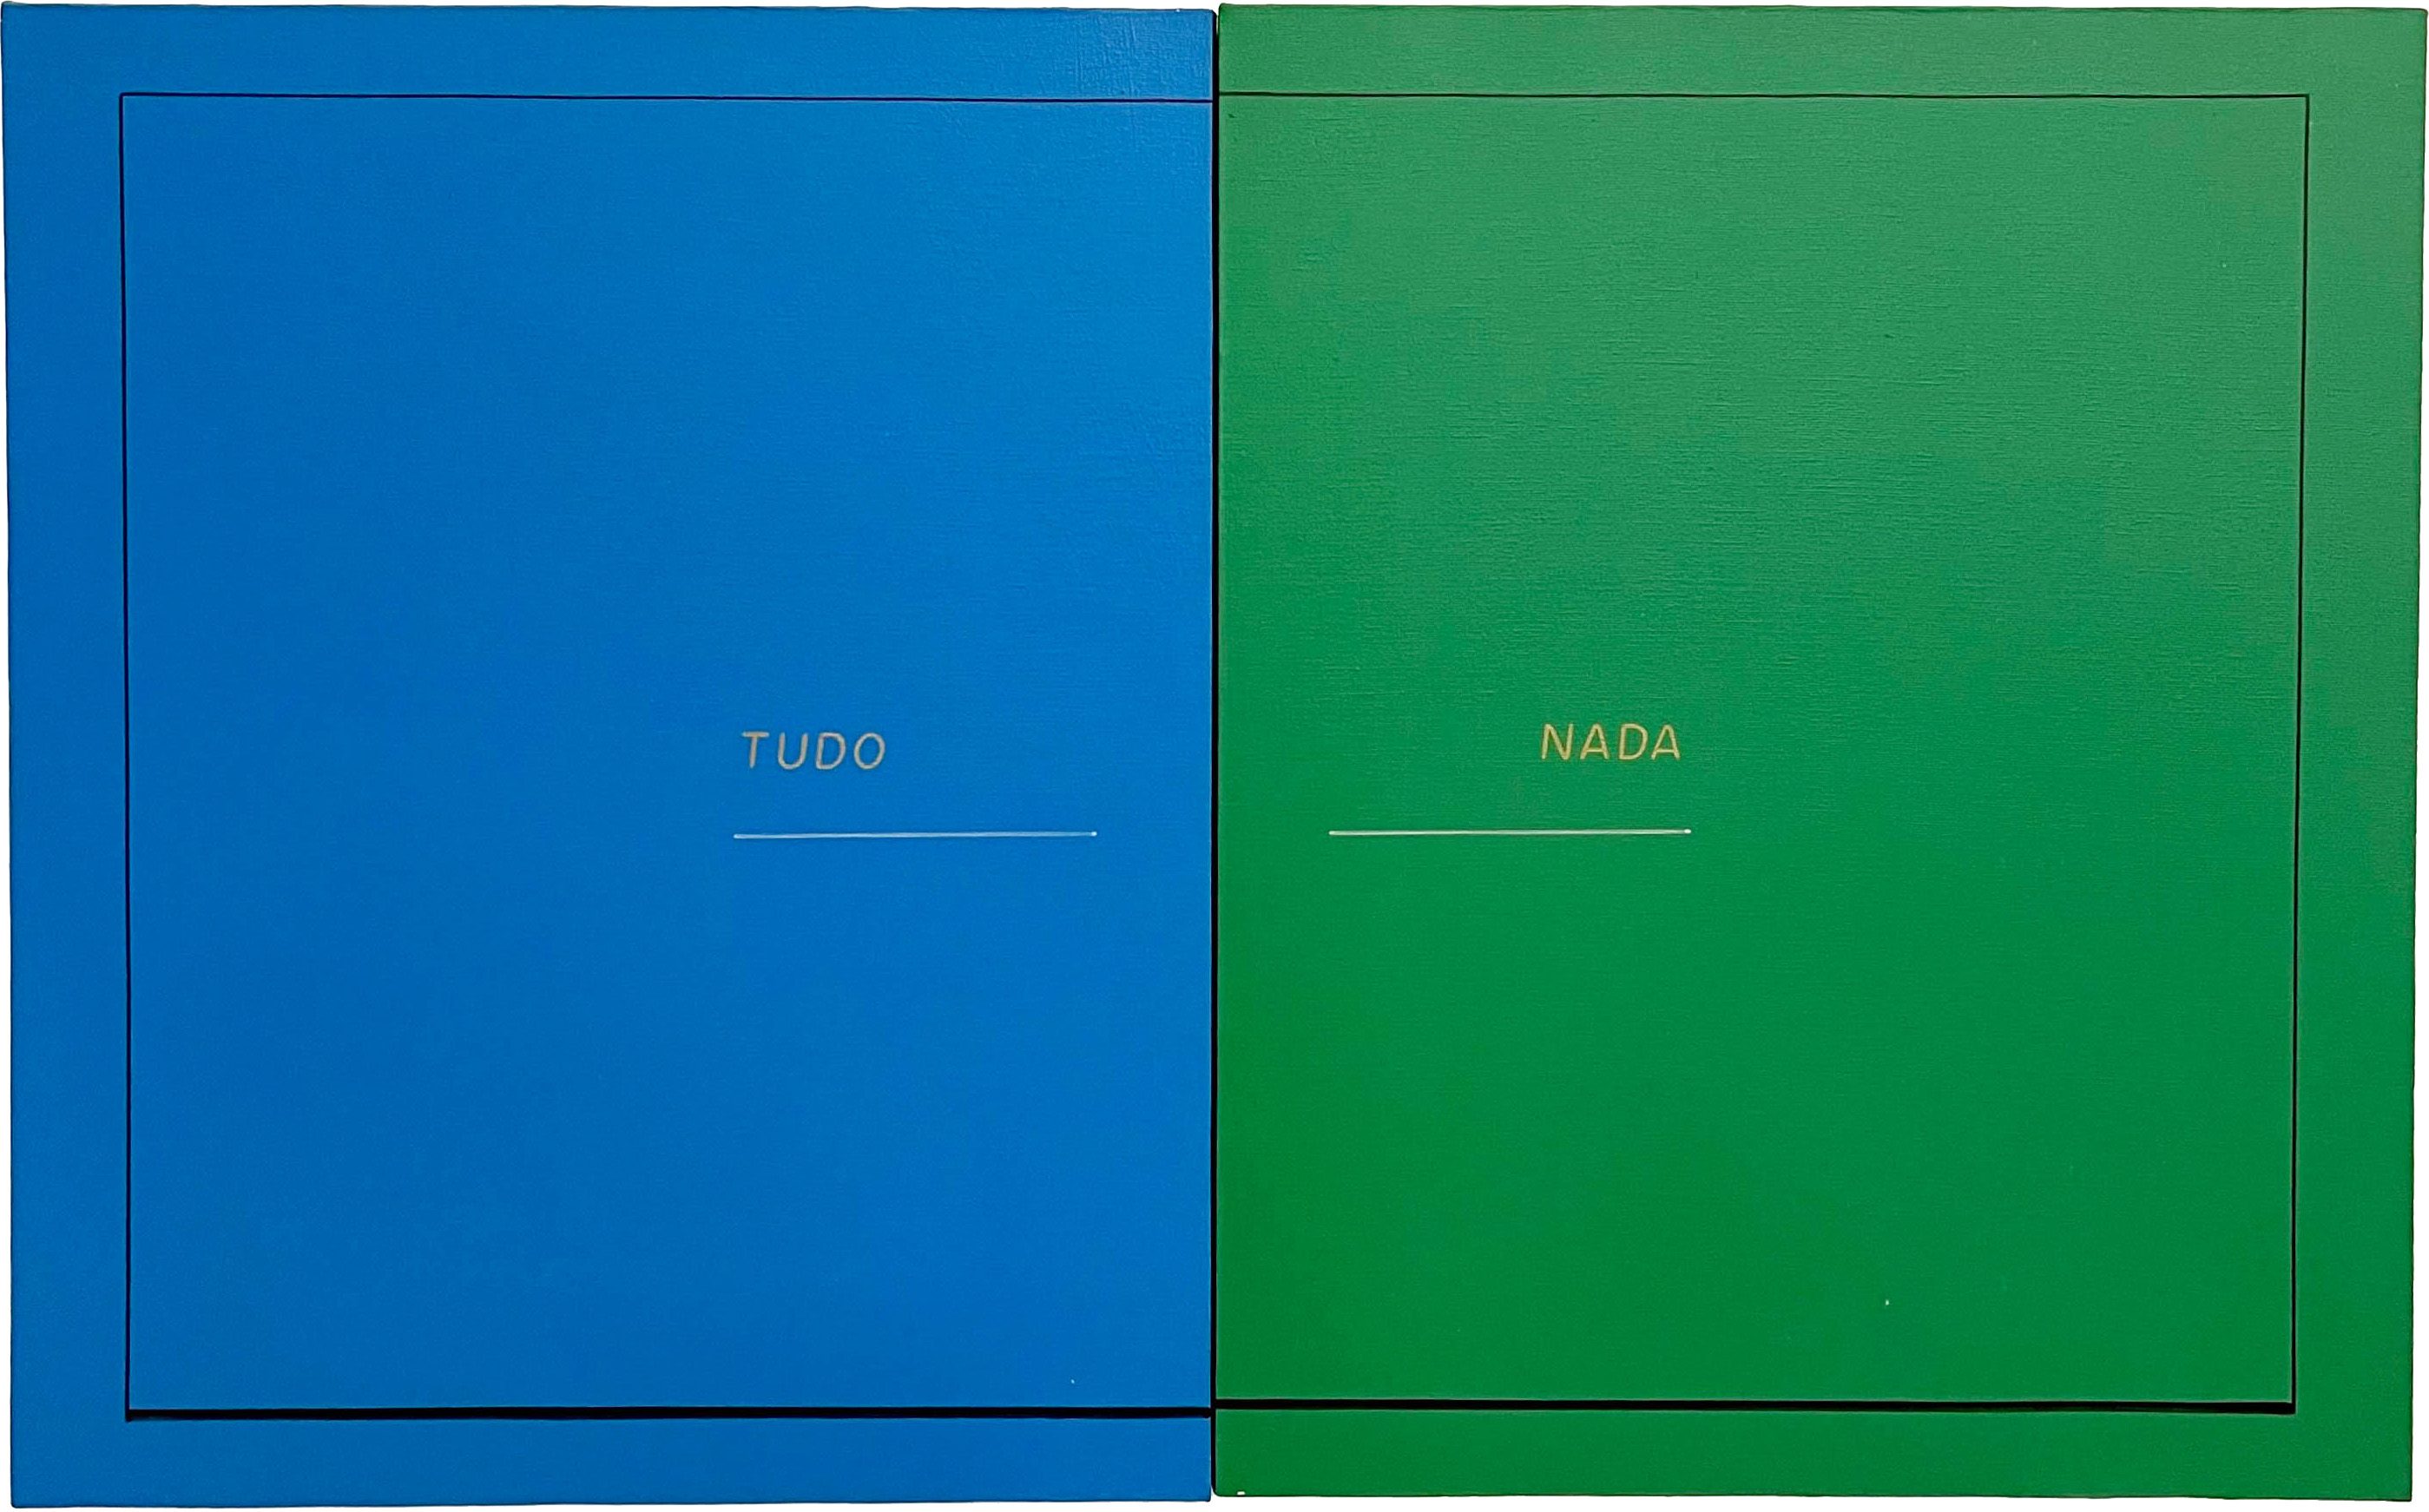 01. Almandrade, Tudo é nada, 1982 2017, Acrílica sobre tela, 50 x 80 cm